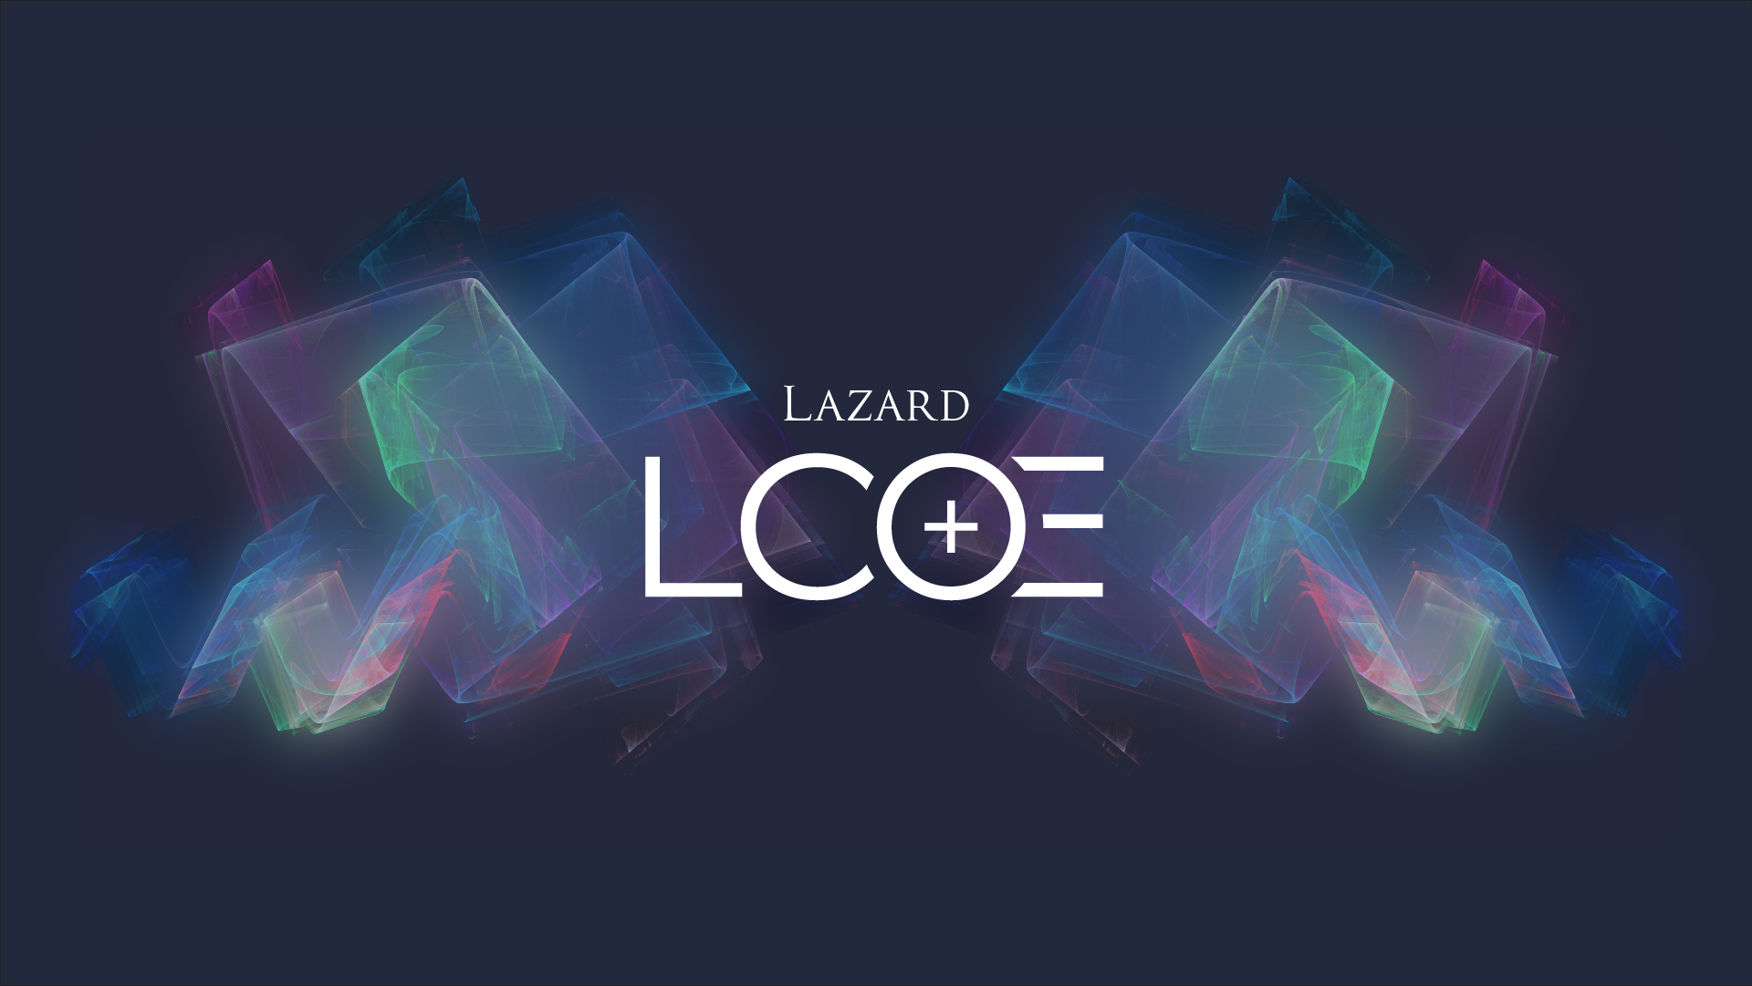 www.lazard.com